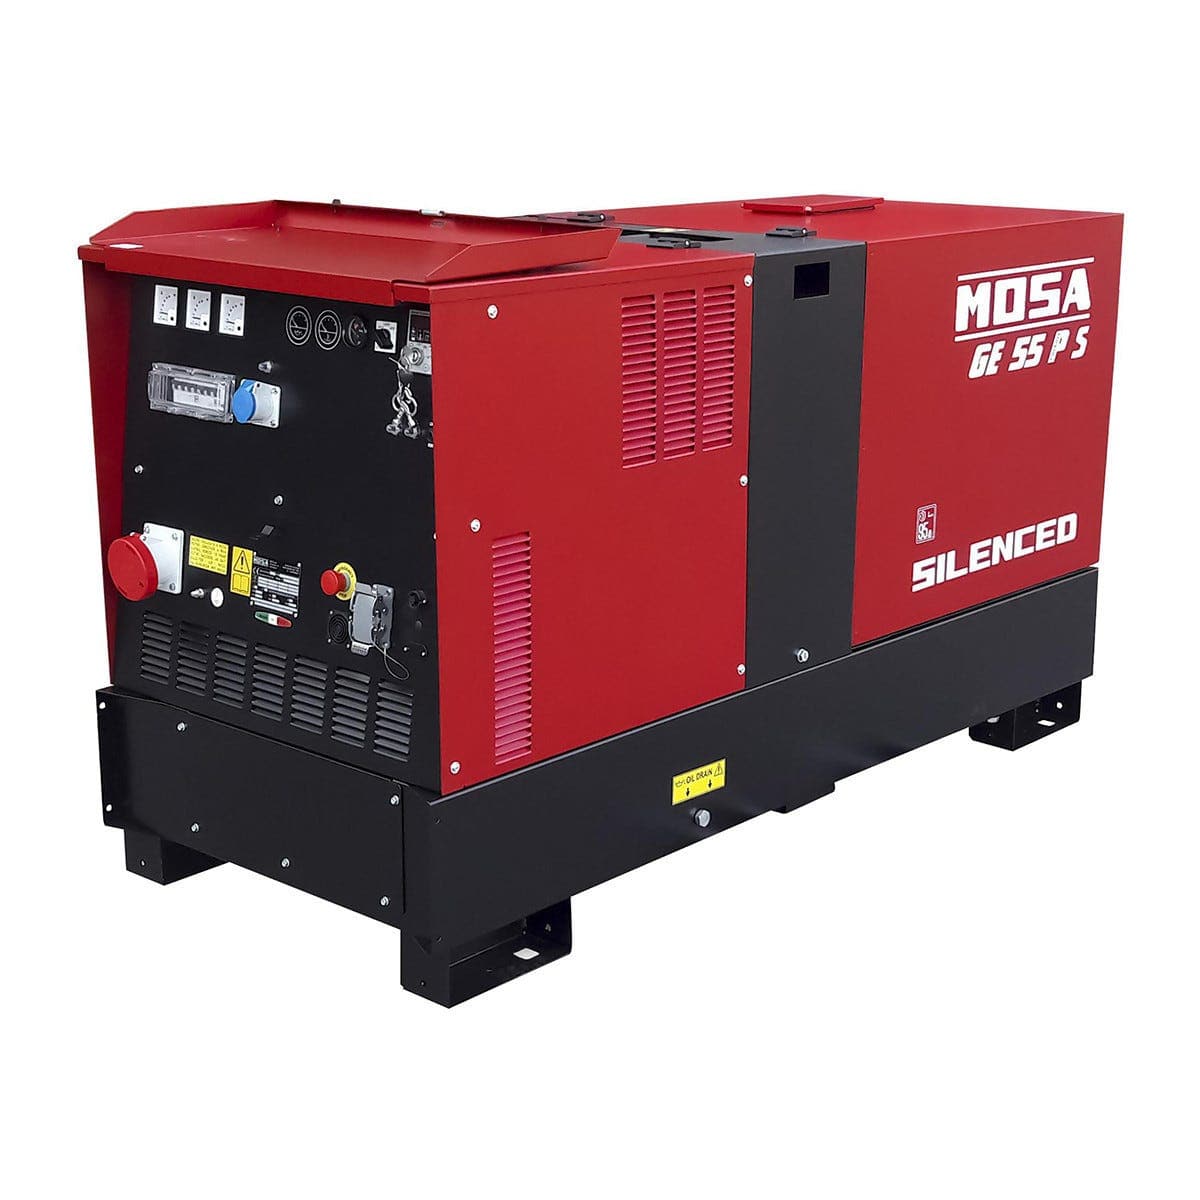 Generator 35000 w mosa ge 55 ps perkins motor three-phase diesel with avr